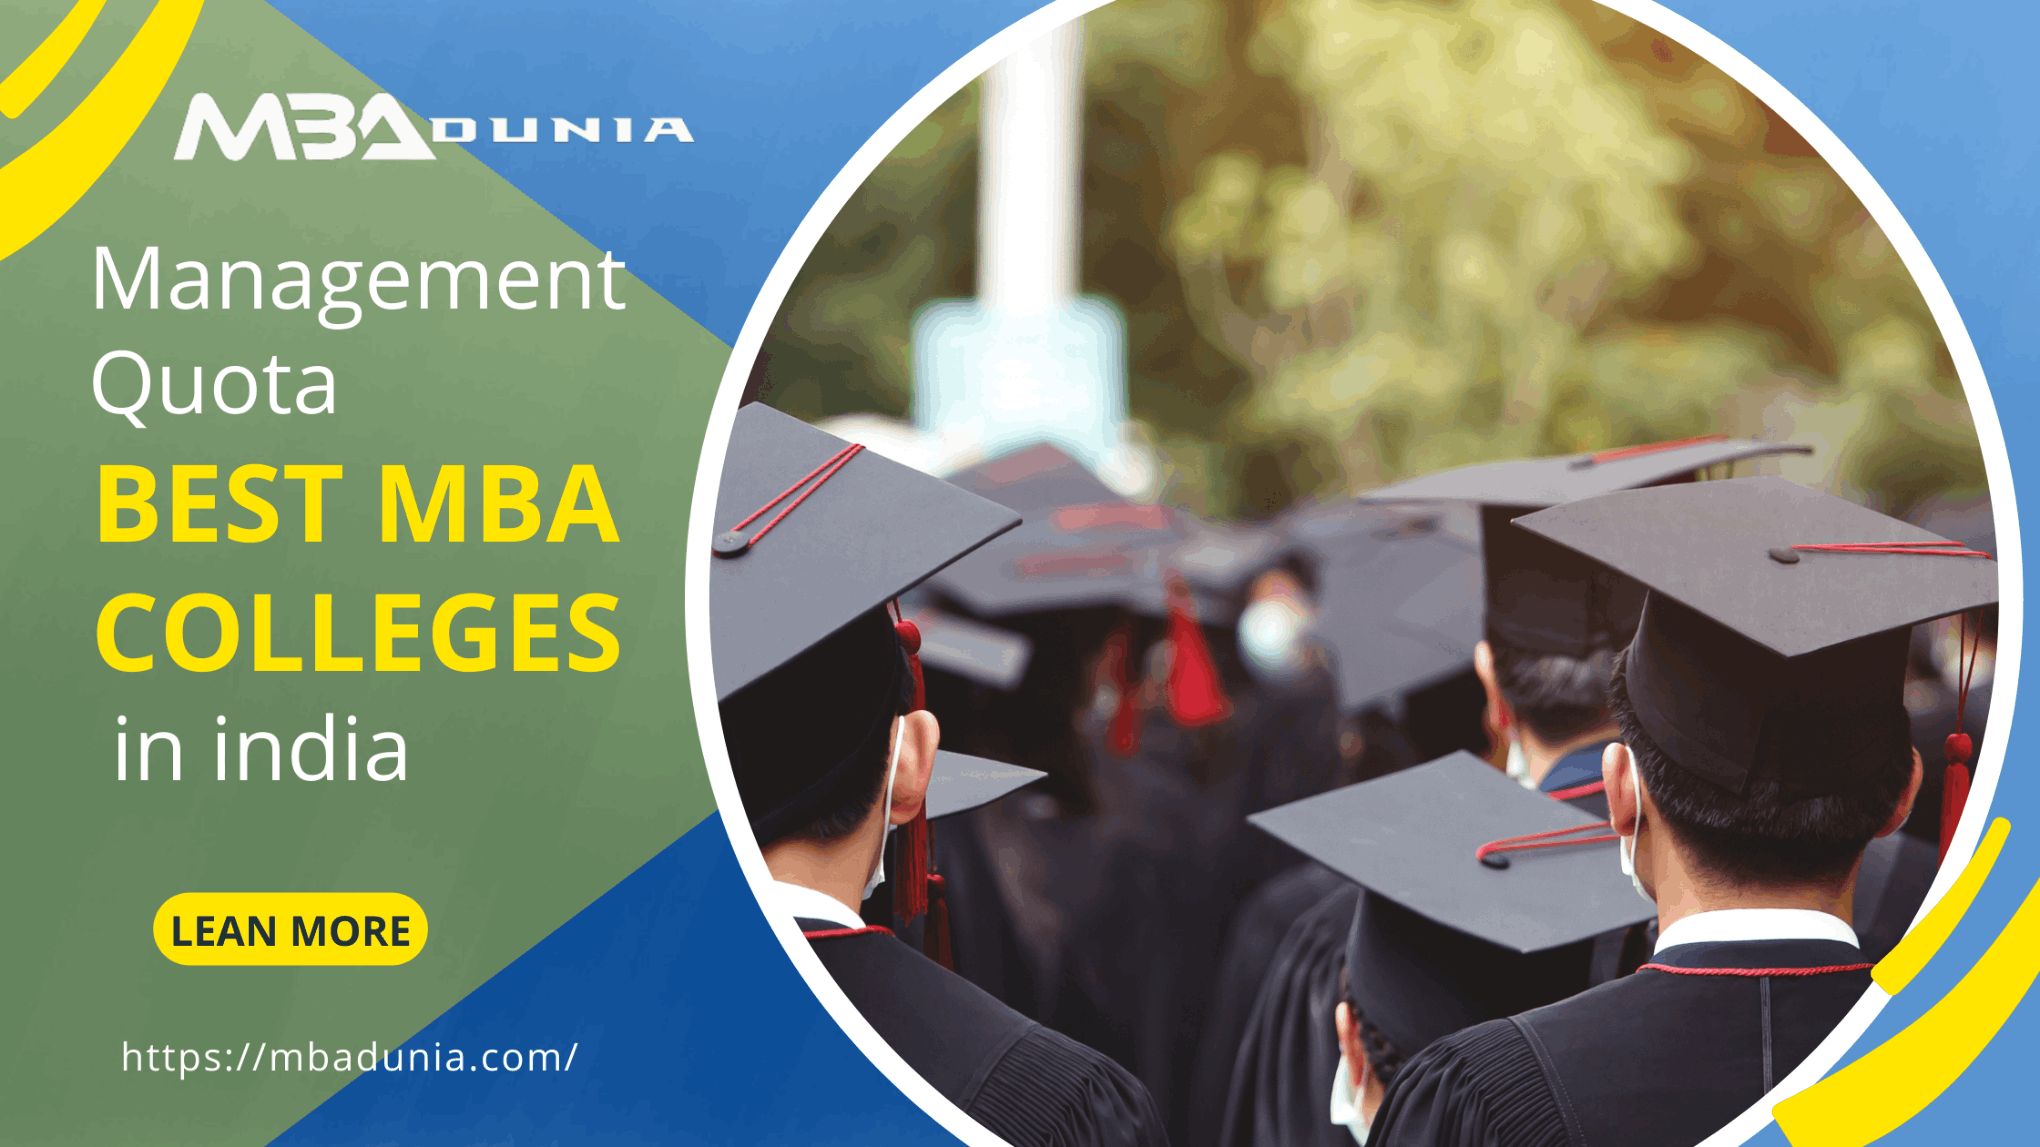 Management Quota In best mba colleges in india